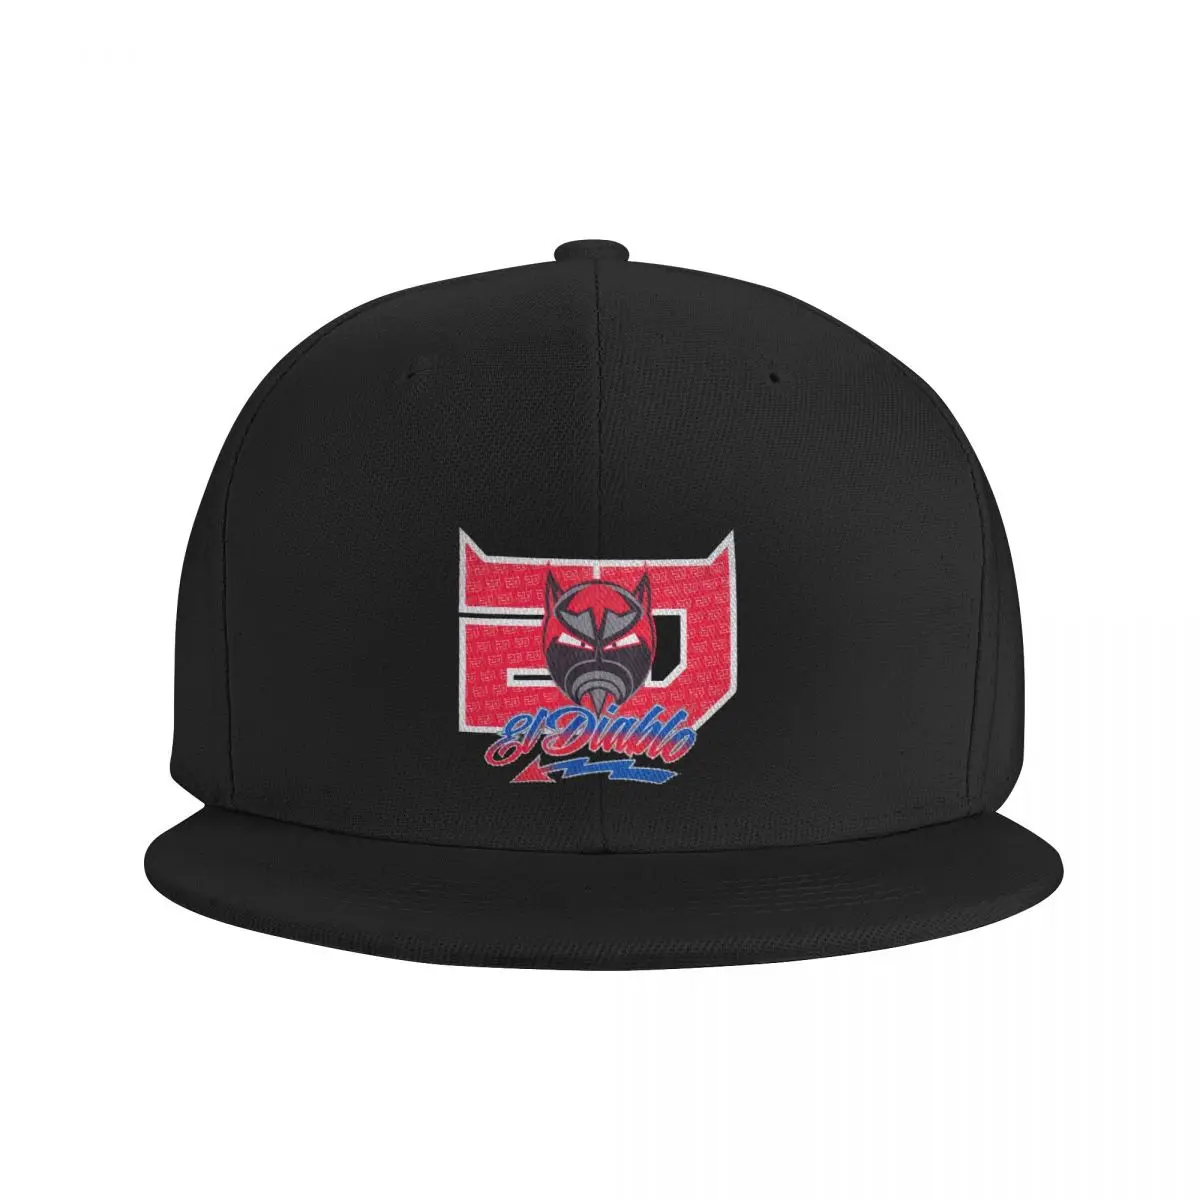 

Classic Fabio Quartararo Baseball Cap for Men Women Adjustable Trucker Hat Sun Protection Snapback Hats Summer Caps